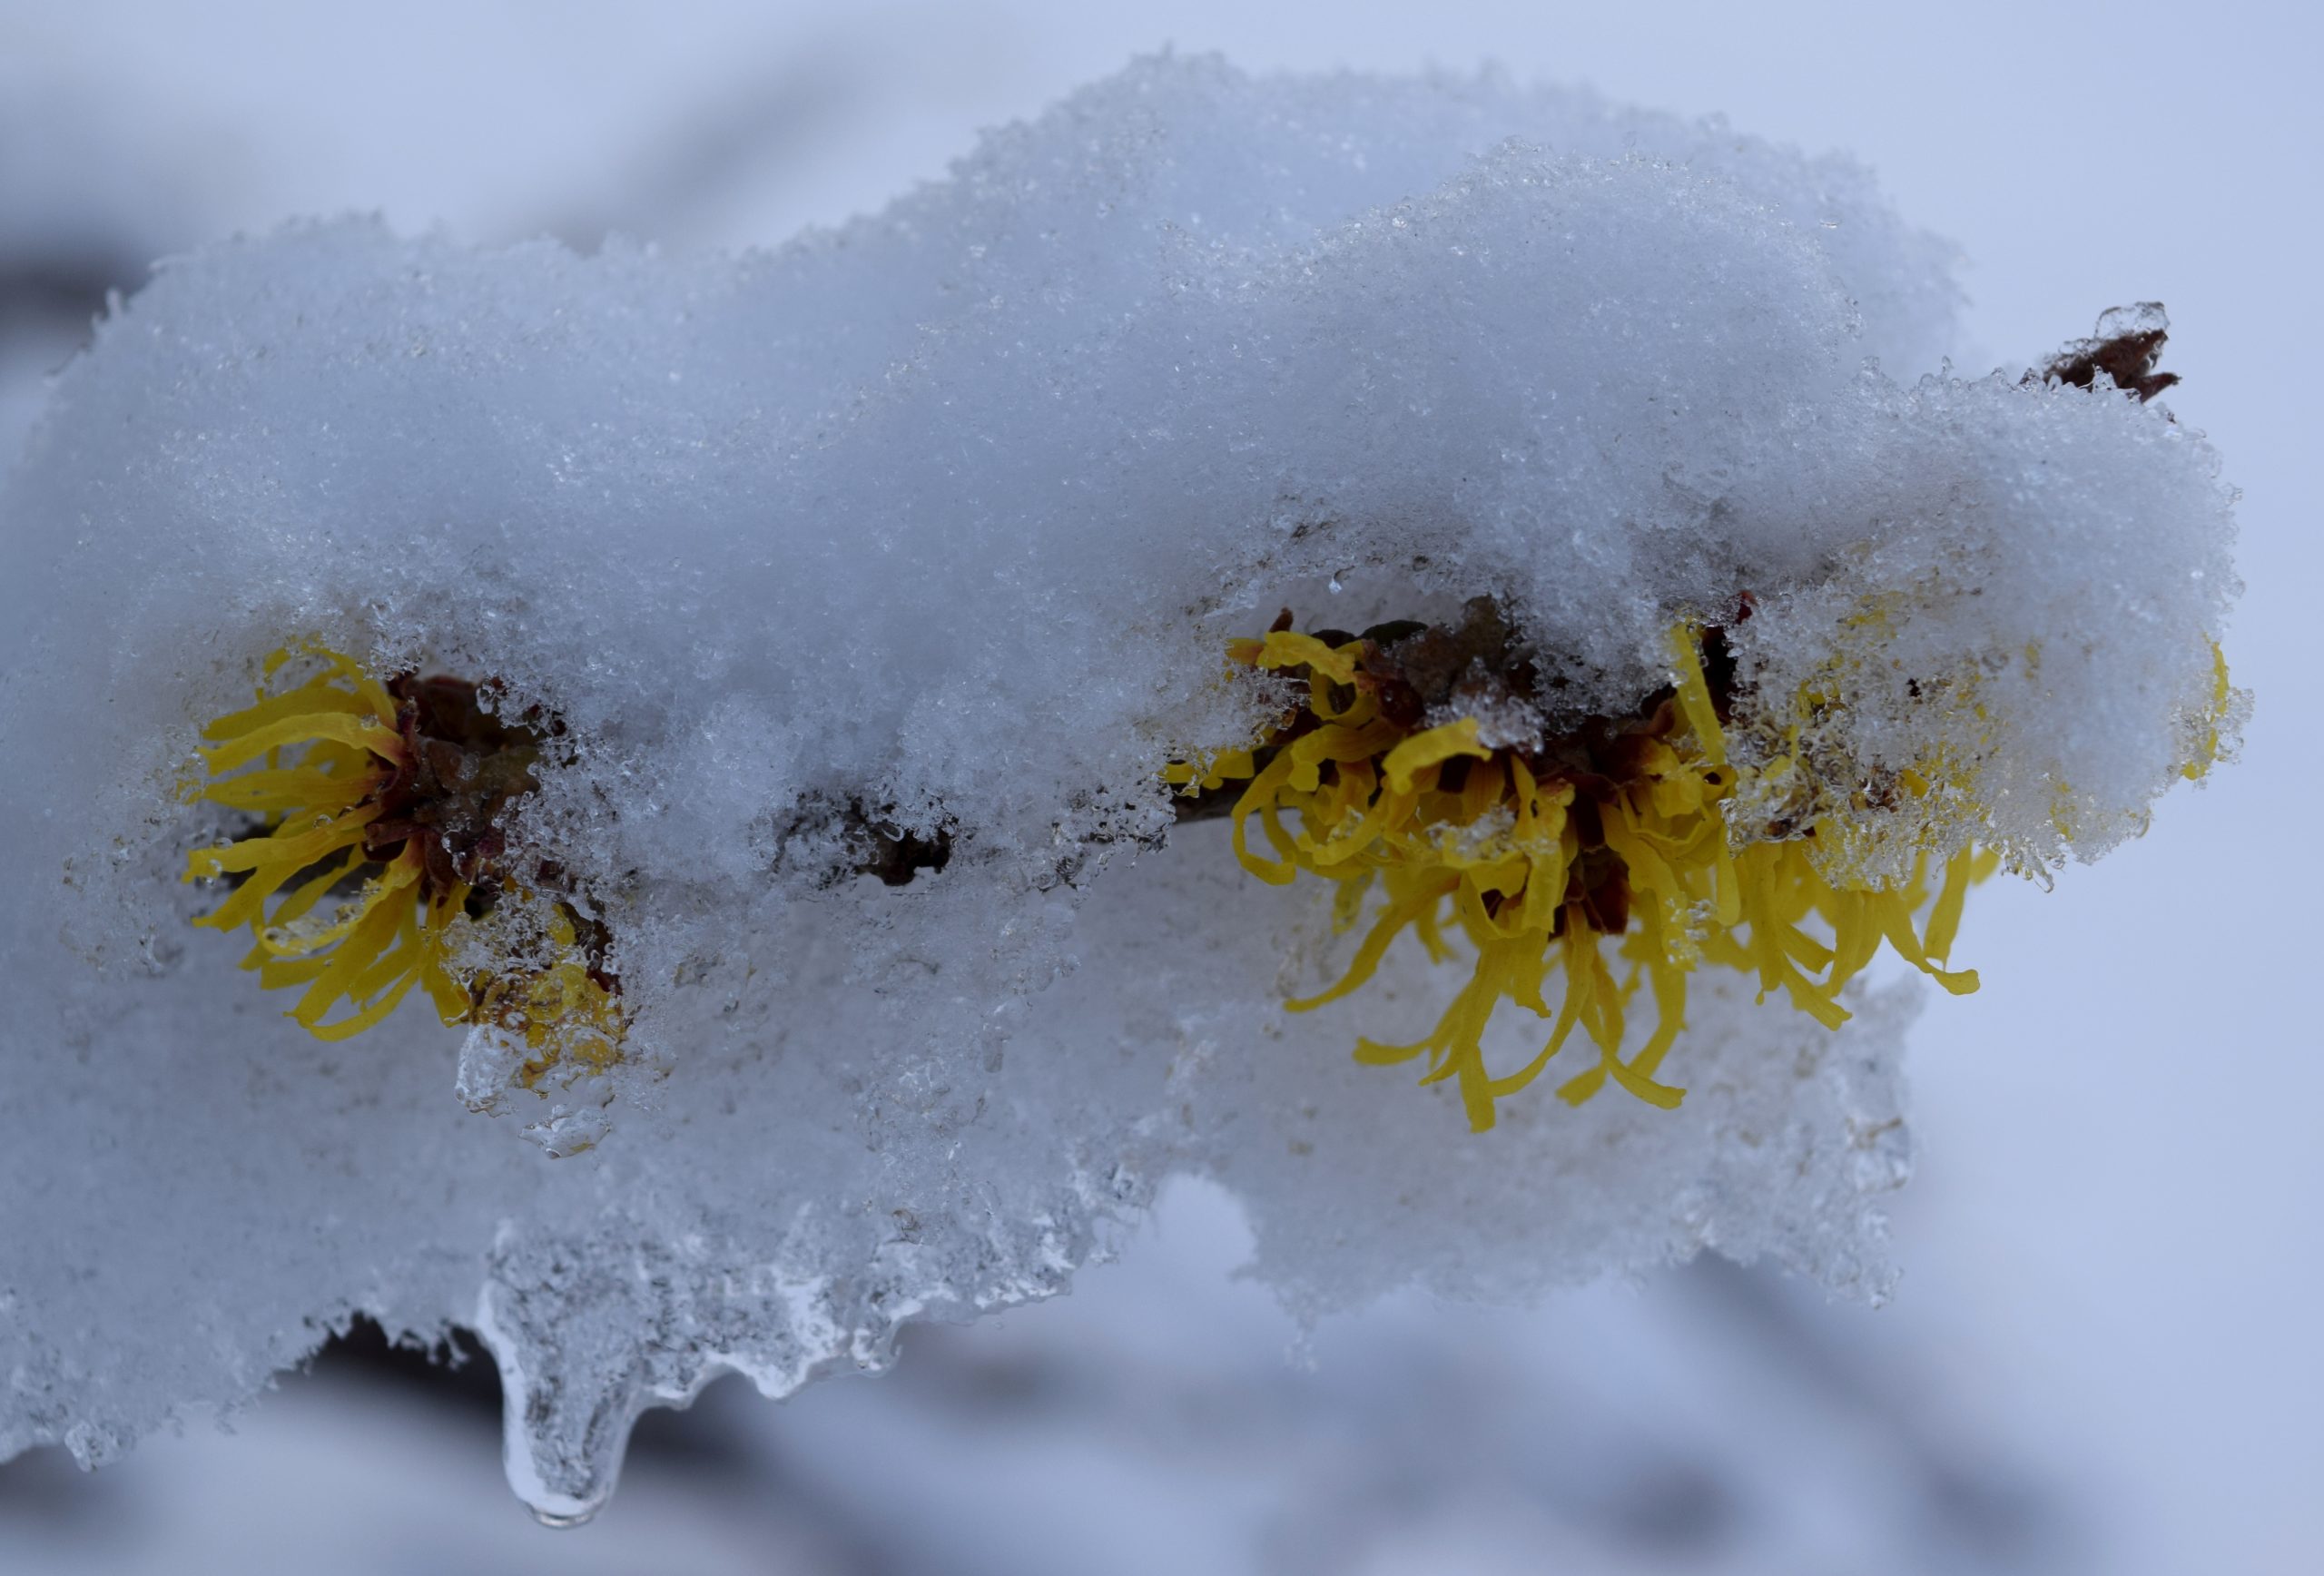 Hamamelis x intermedia 'Sunburst' in the snow